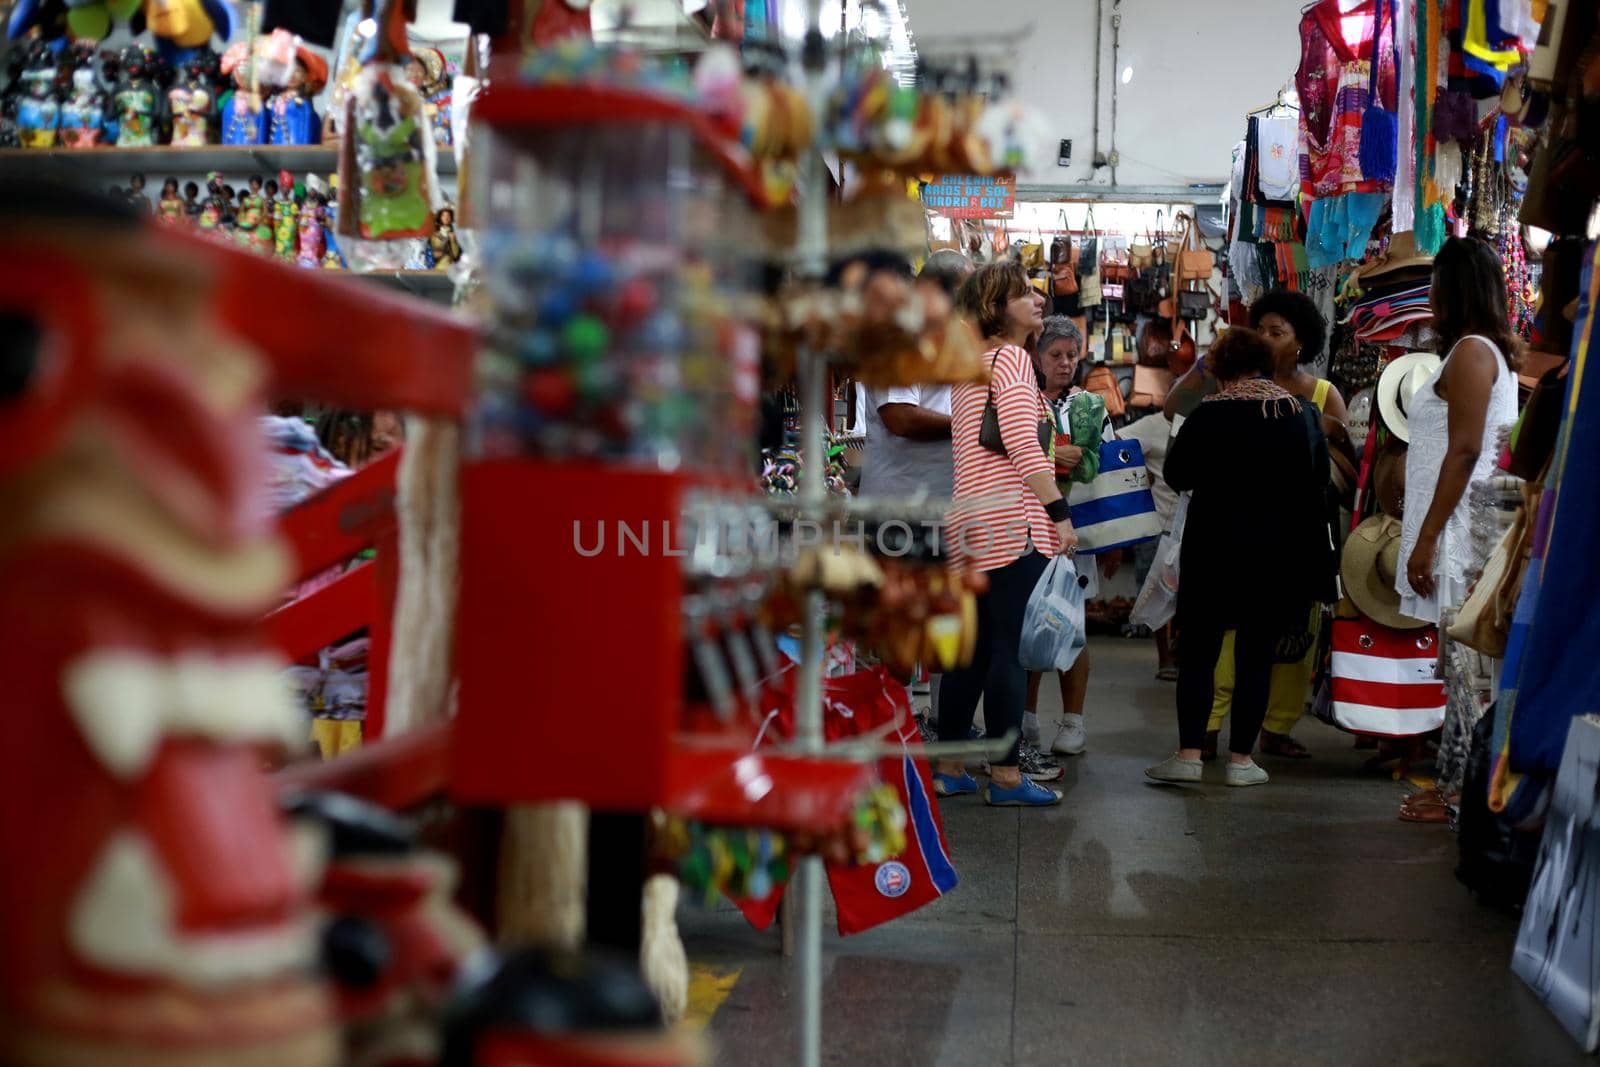 salvador, bahia / brazil - may 23, 2015: Tourists are seen in Mercado Modelo stores in the city of Salvador.
